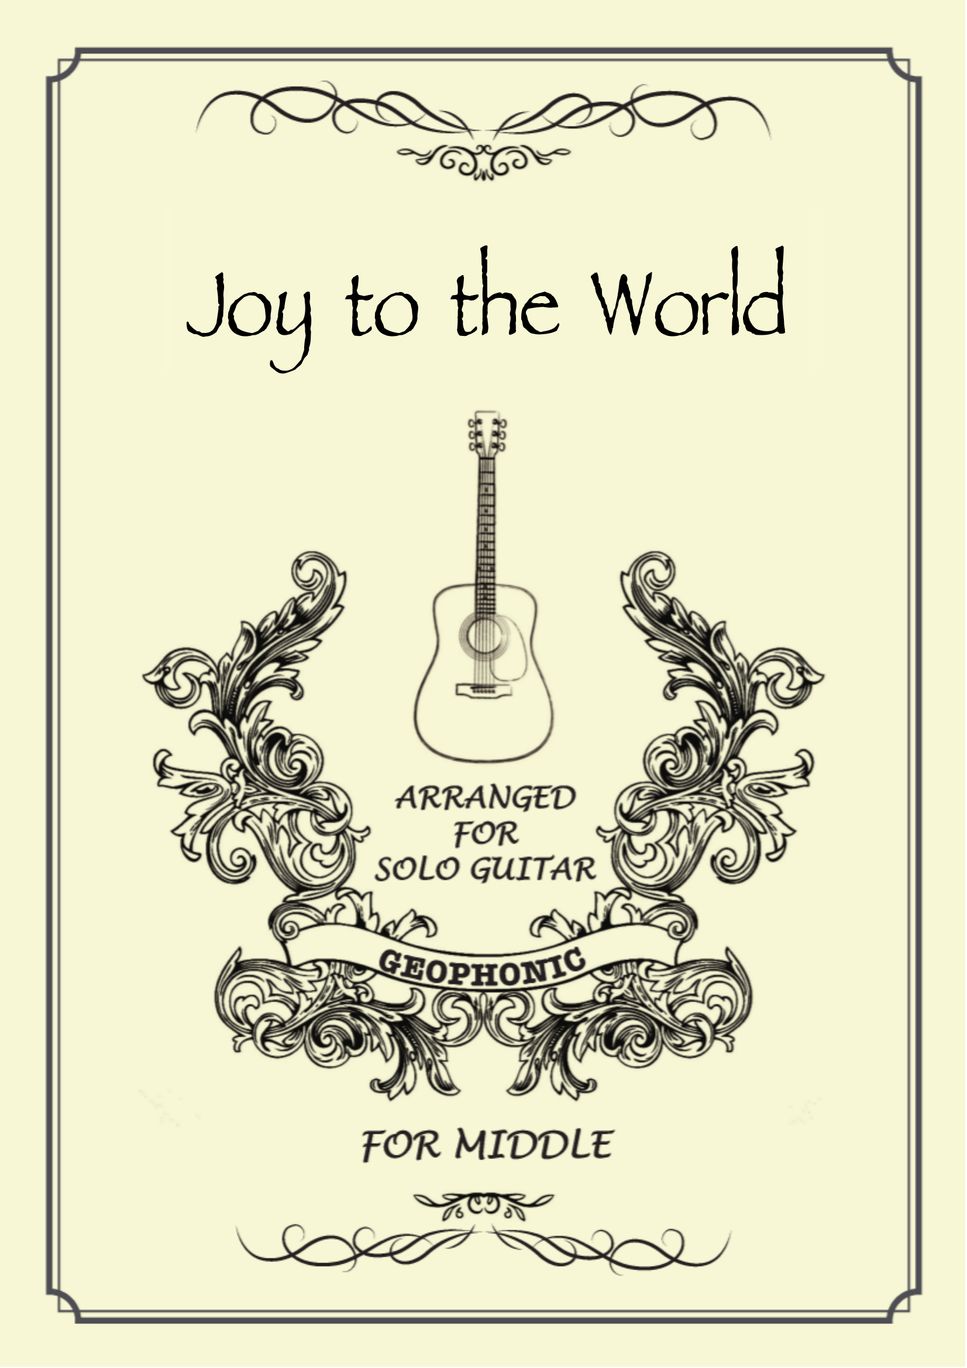 Lowell Mason - Joy to the World by GEOPHONIC